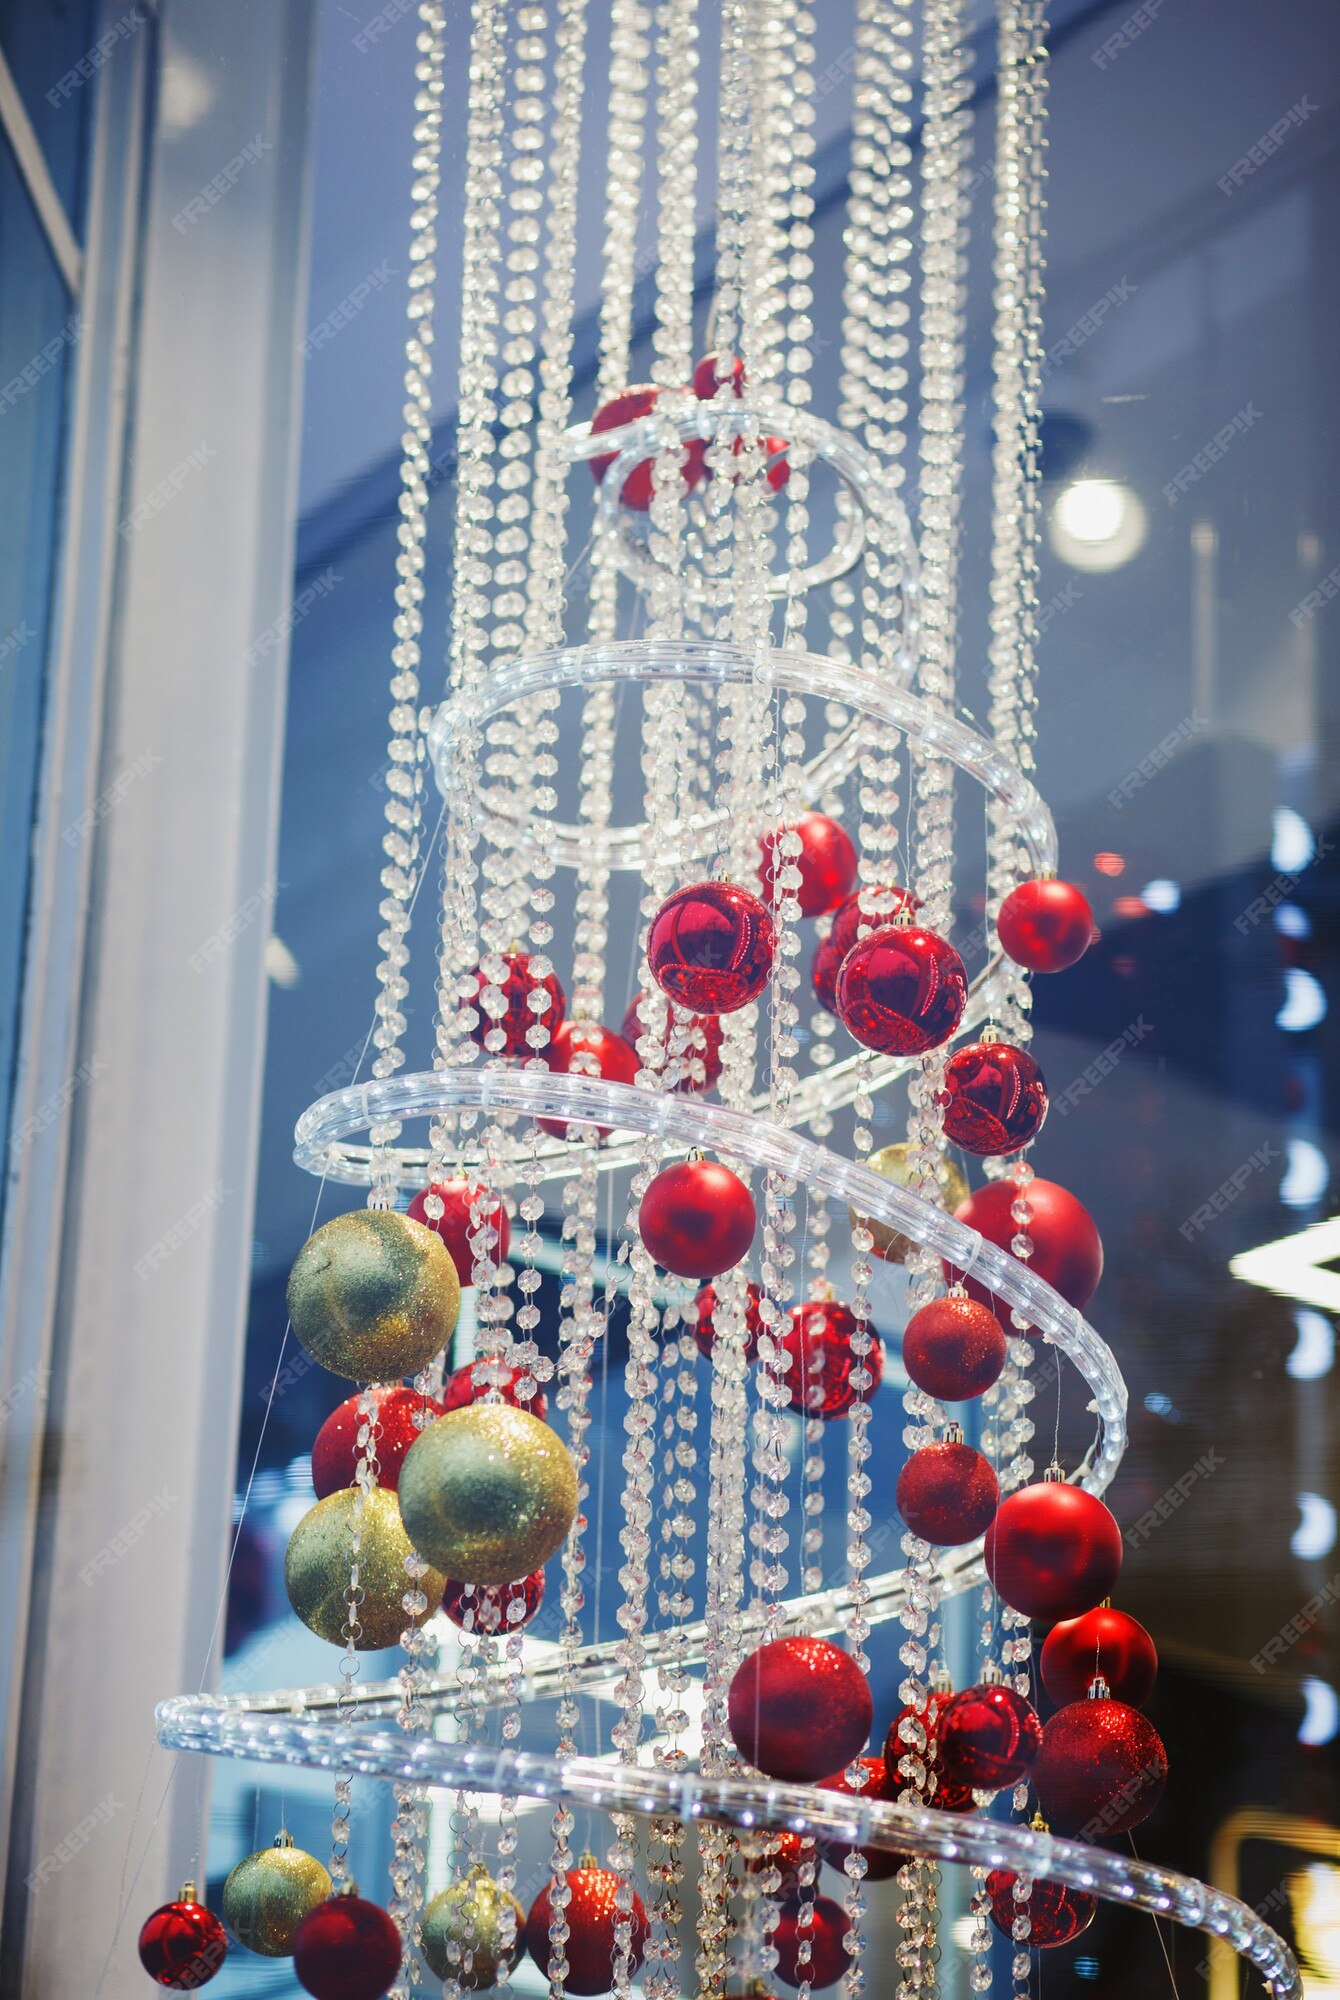 Decoración navideña de bolas colgantes | Premium